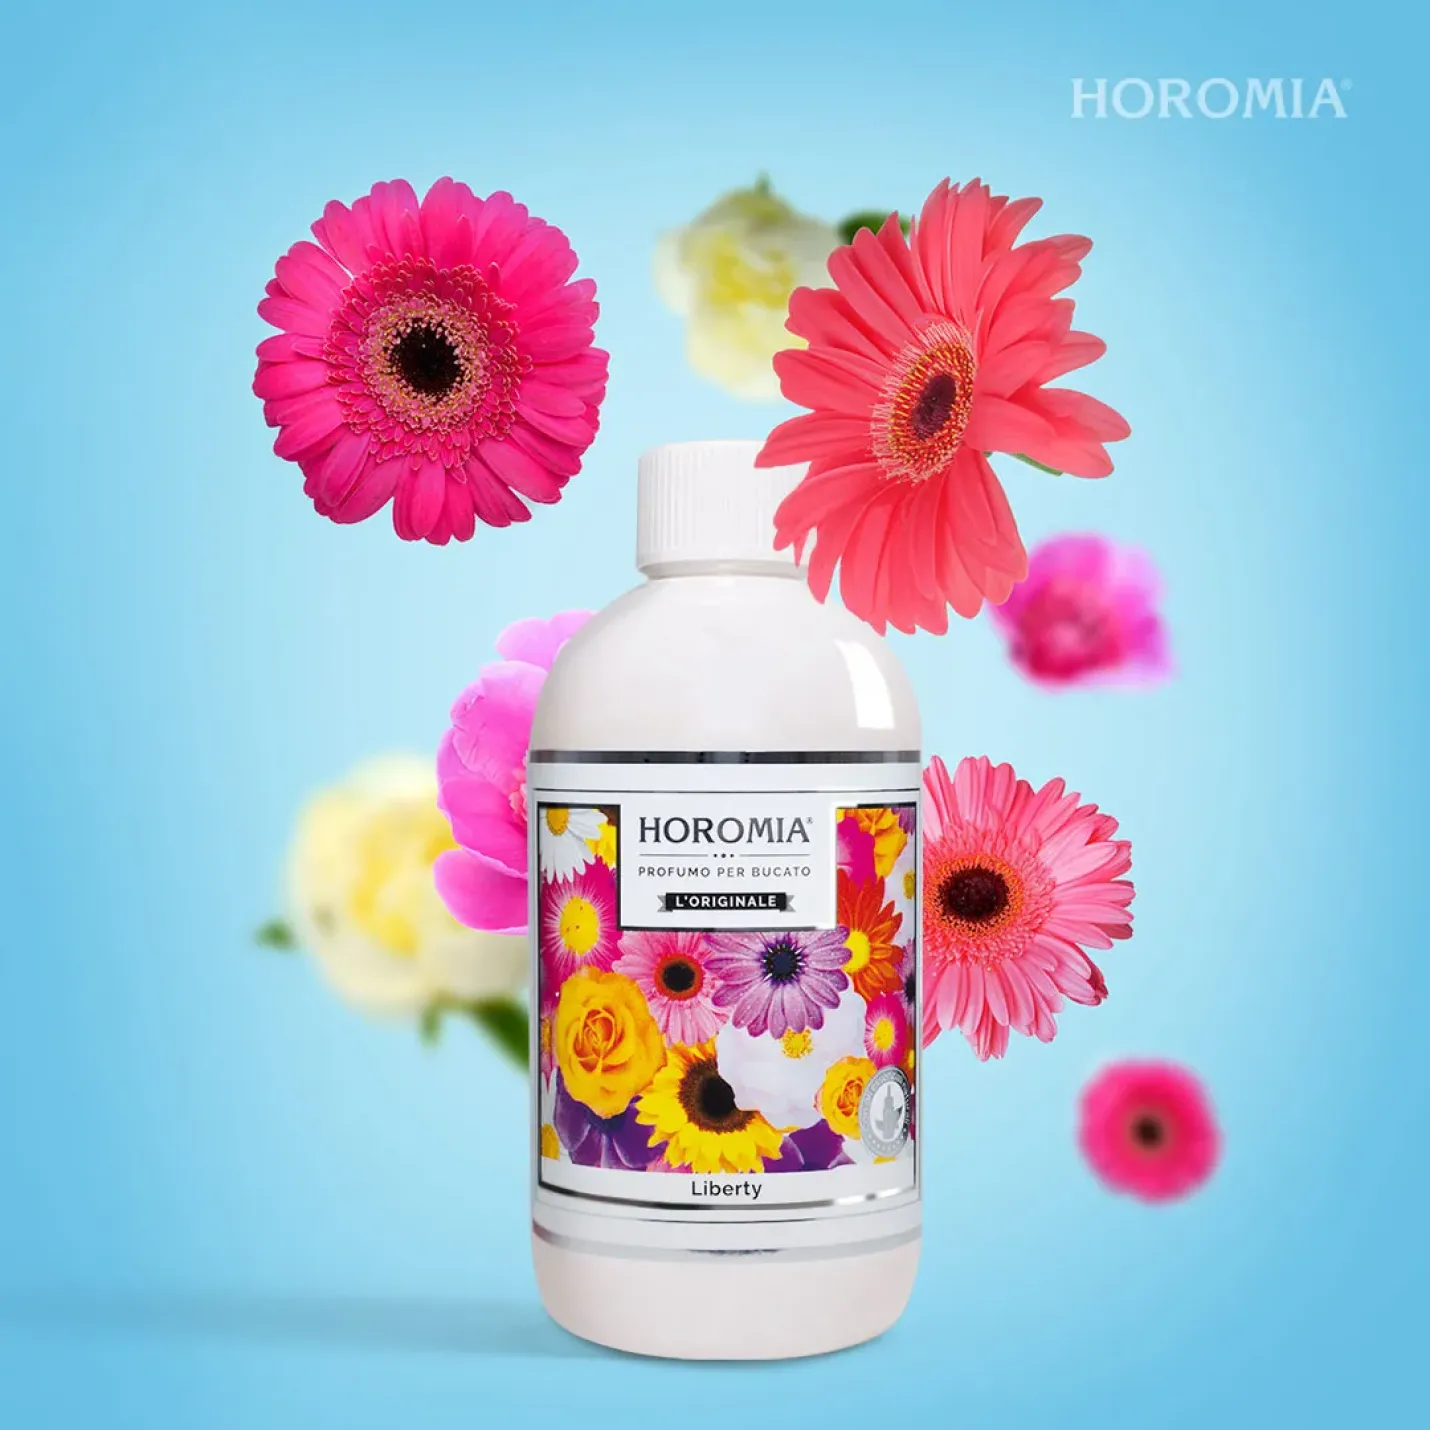 Horomia Wasparfum Liberty Limited Edition - 50ml; Afbeelding: 2